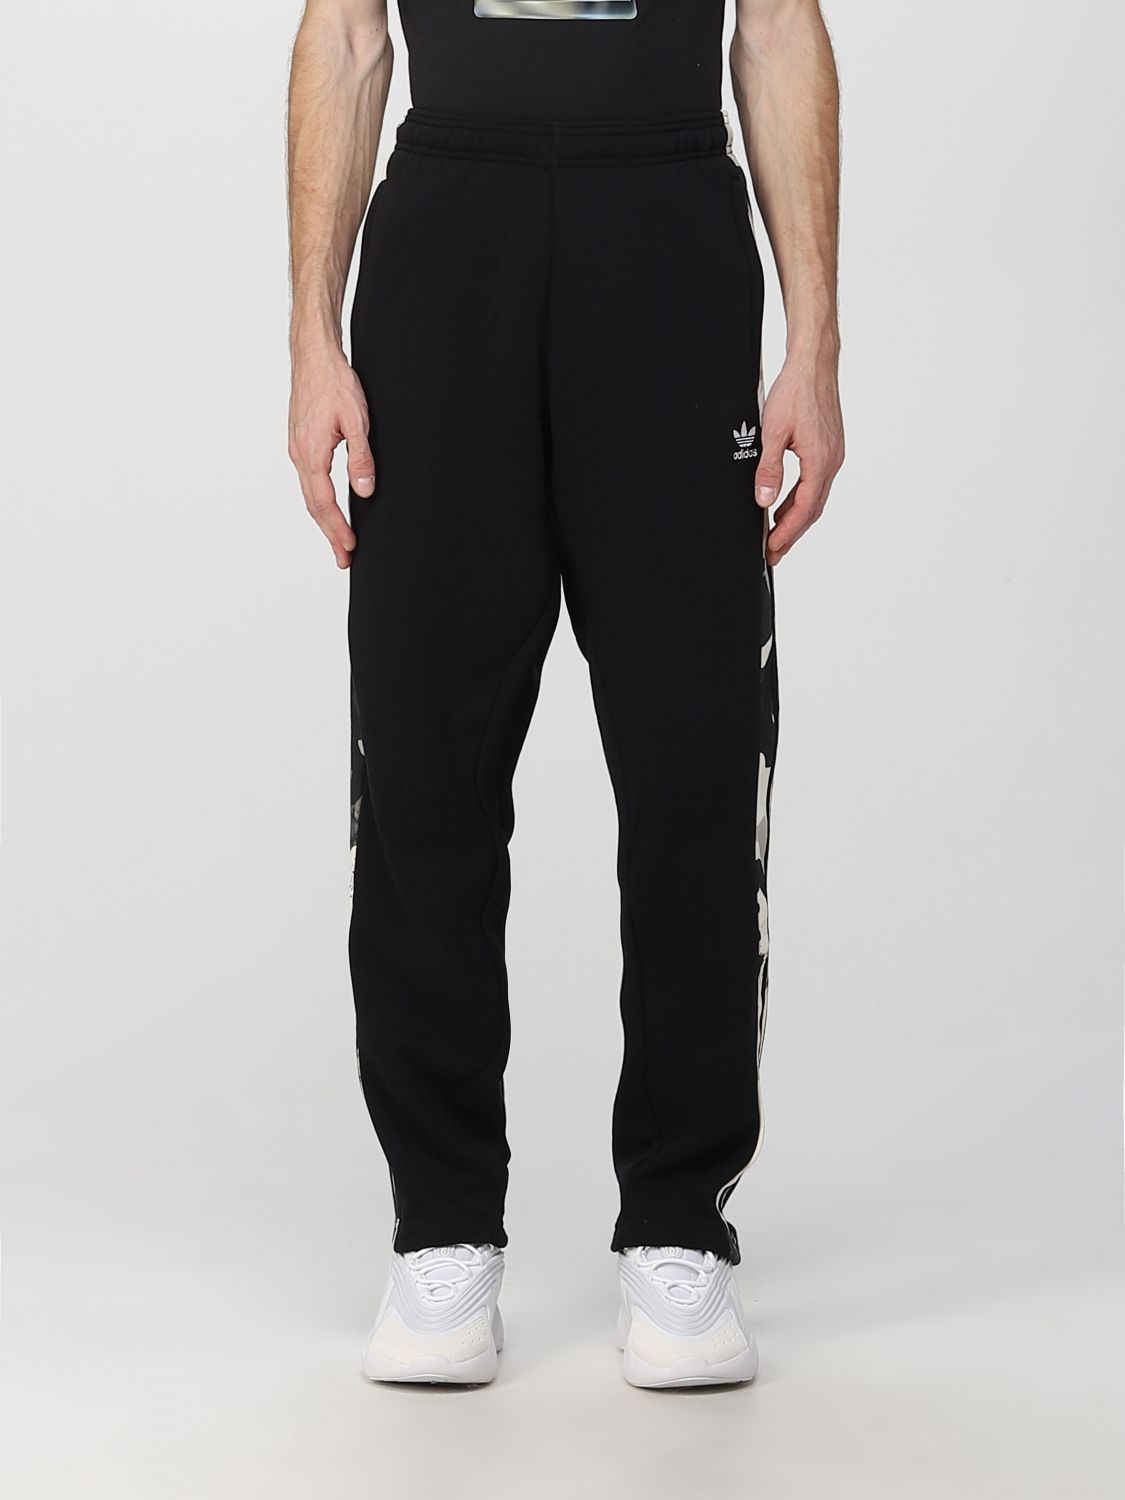 ADIDAS ORIGINALS: pants for man - Black | Adidas Originals pants HK2808 ...